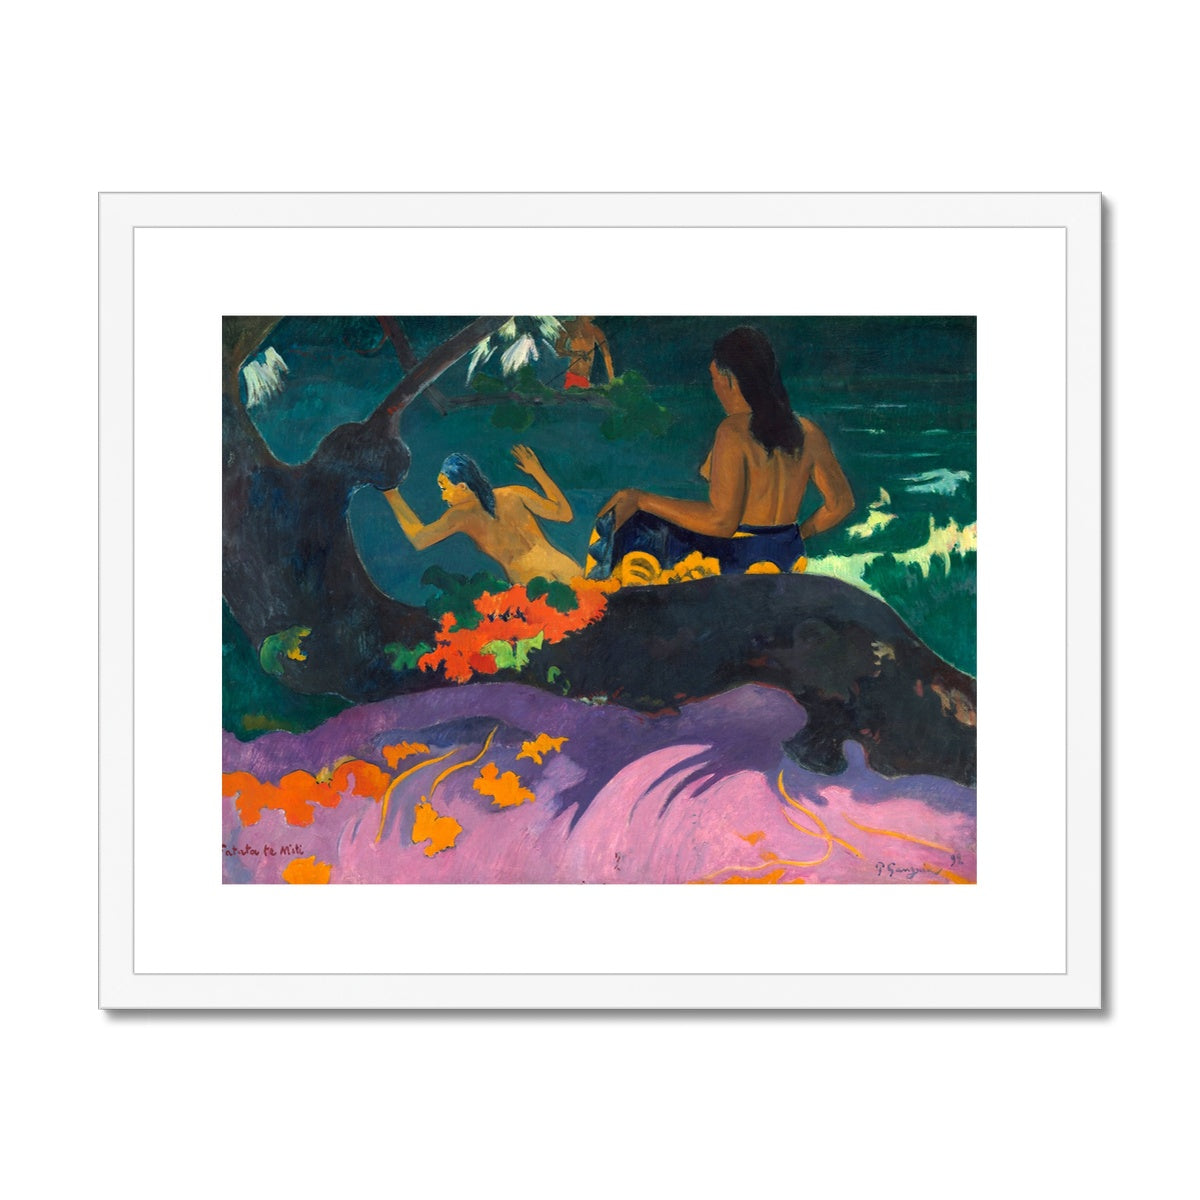 Paul Gauguin Framed Open Edition Art Print. 'Fatata te Miti', by the sea. Art Gallery Historic Art